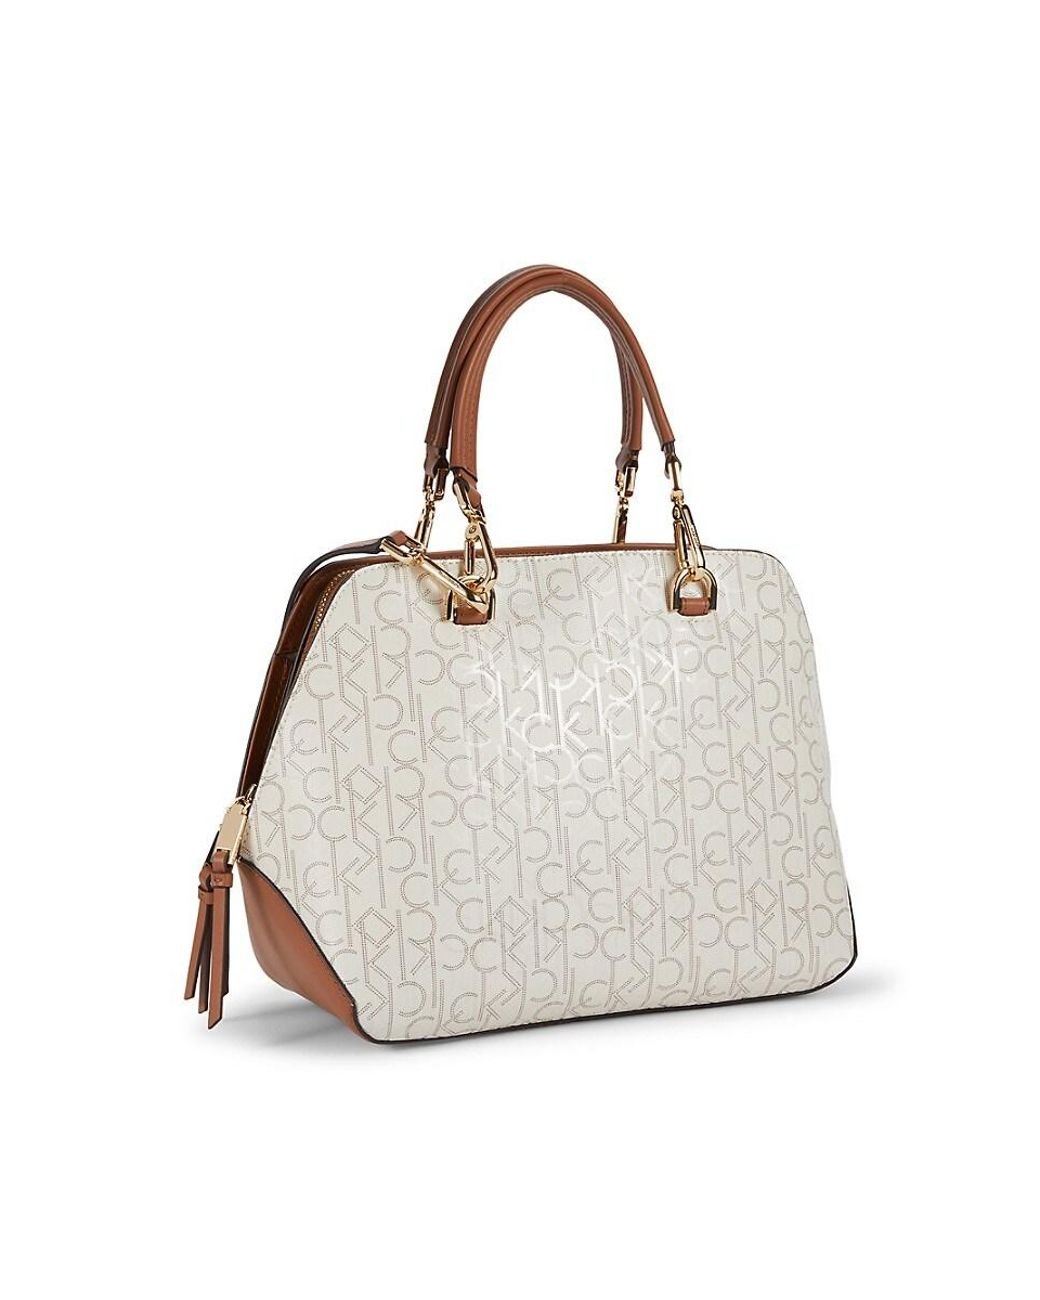 calvin klein purse white and tan